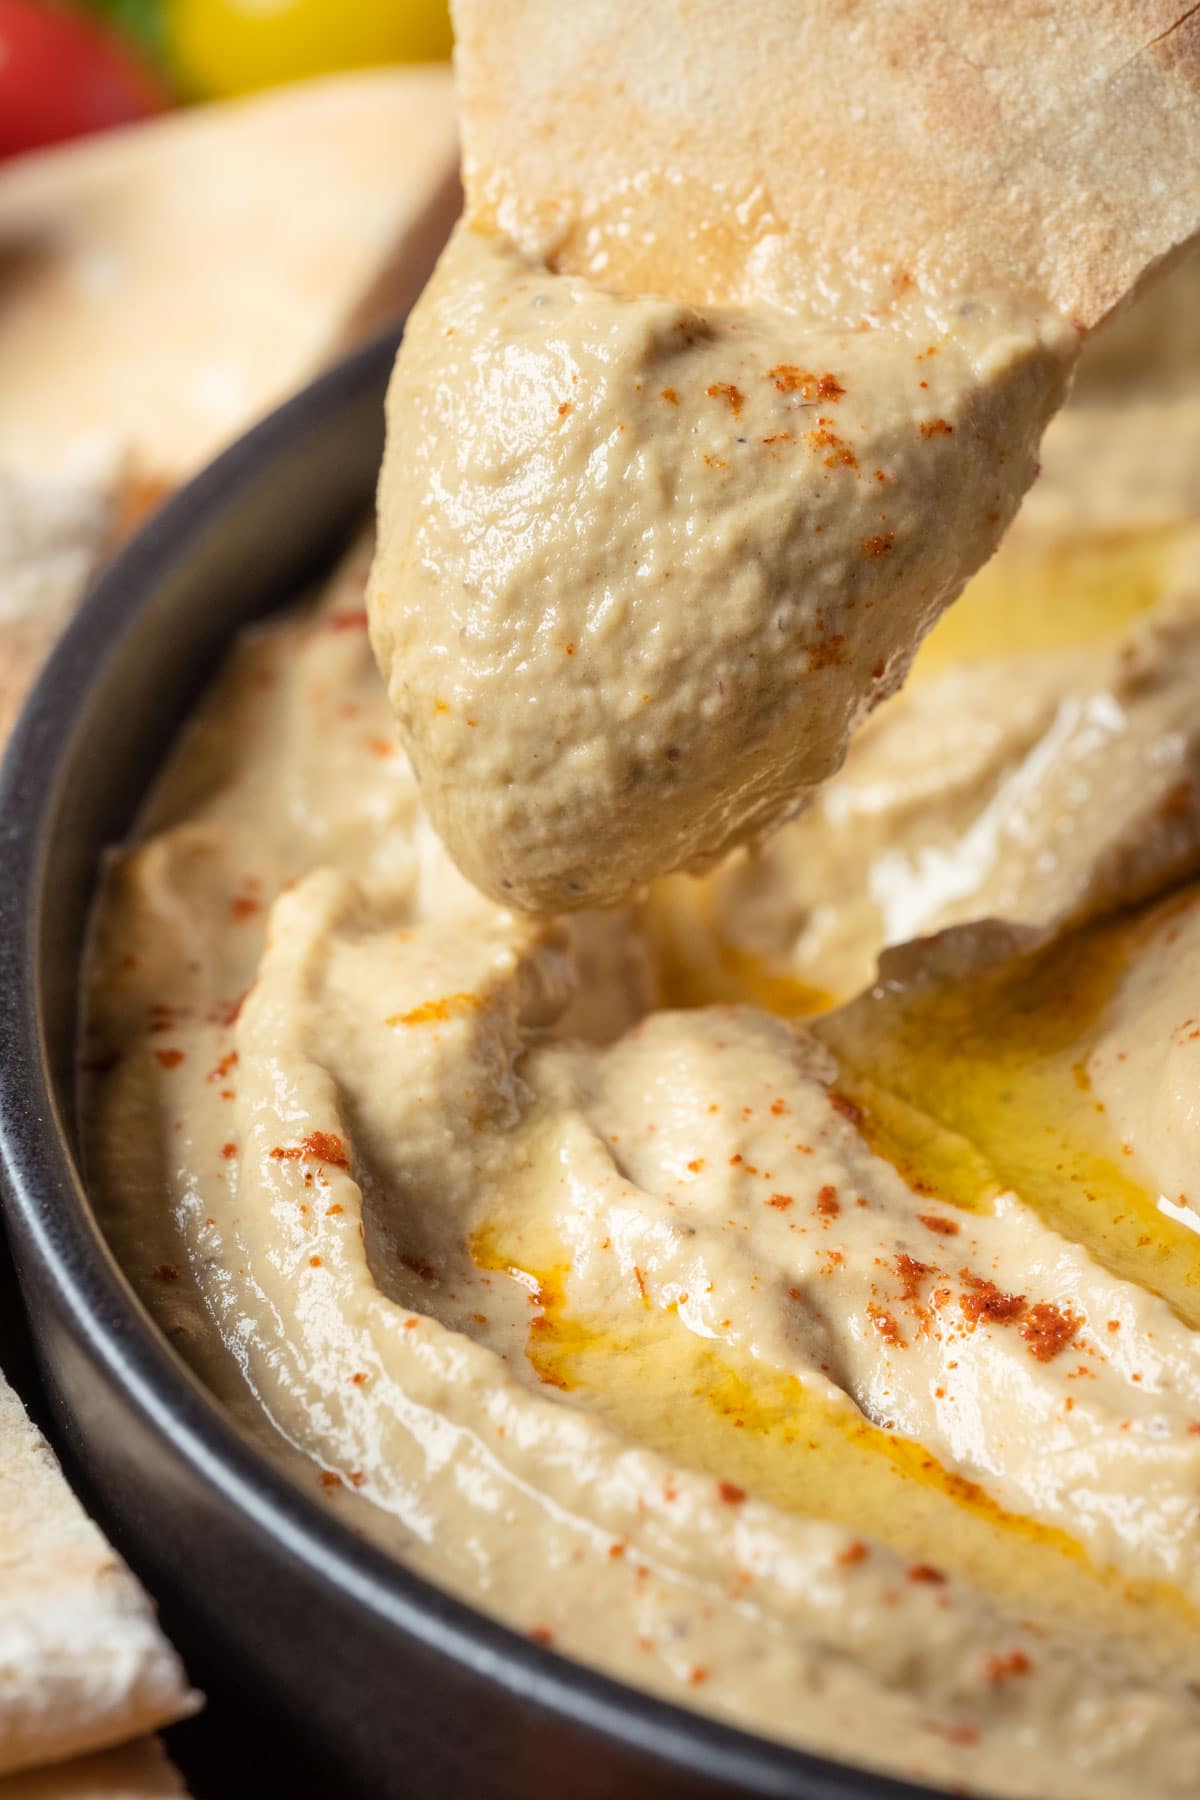 Pita bread dipped into a bowl of baba ganoush.